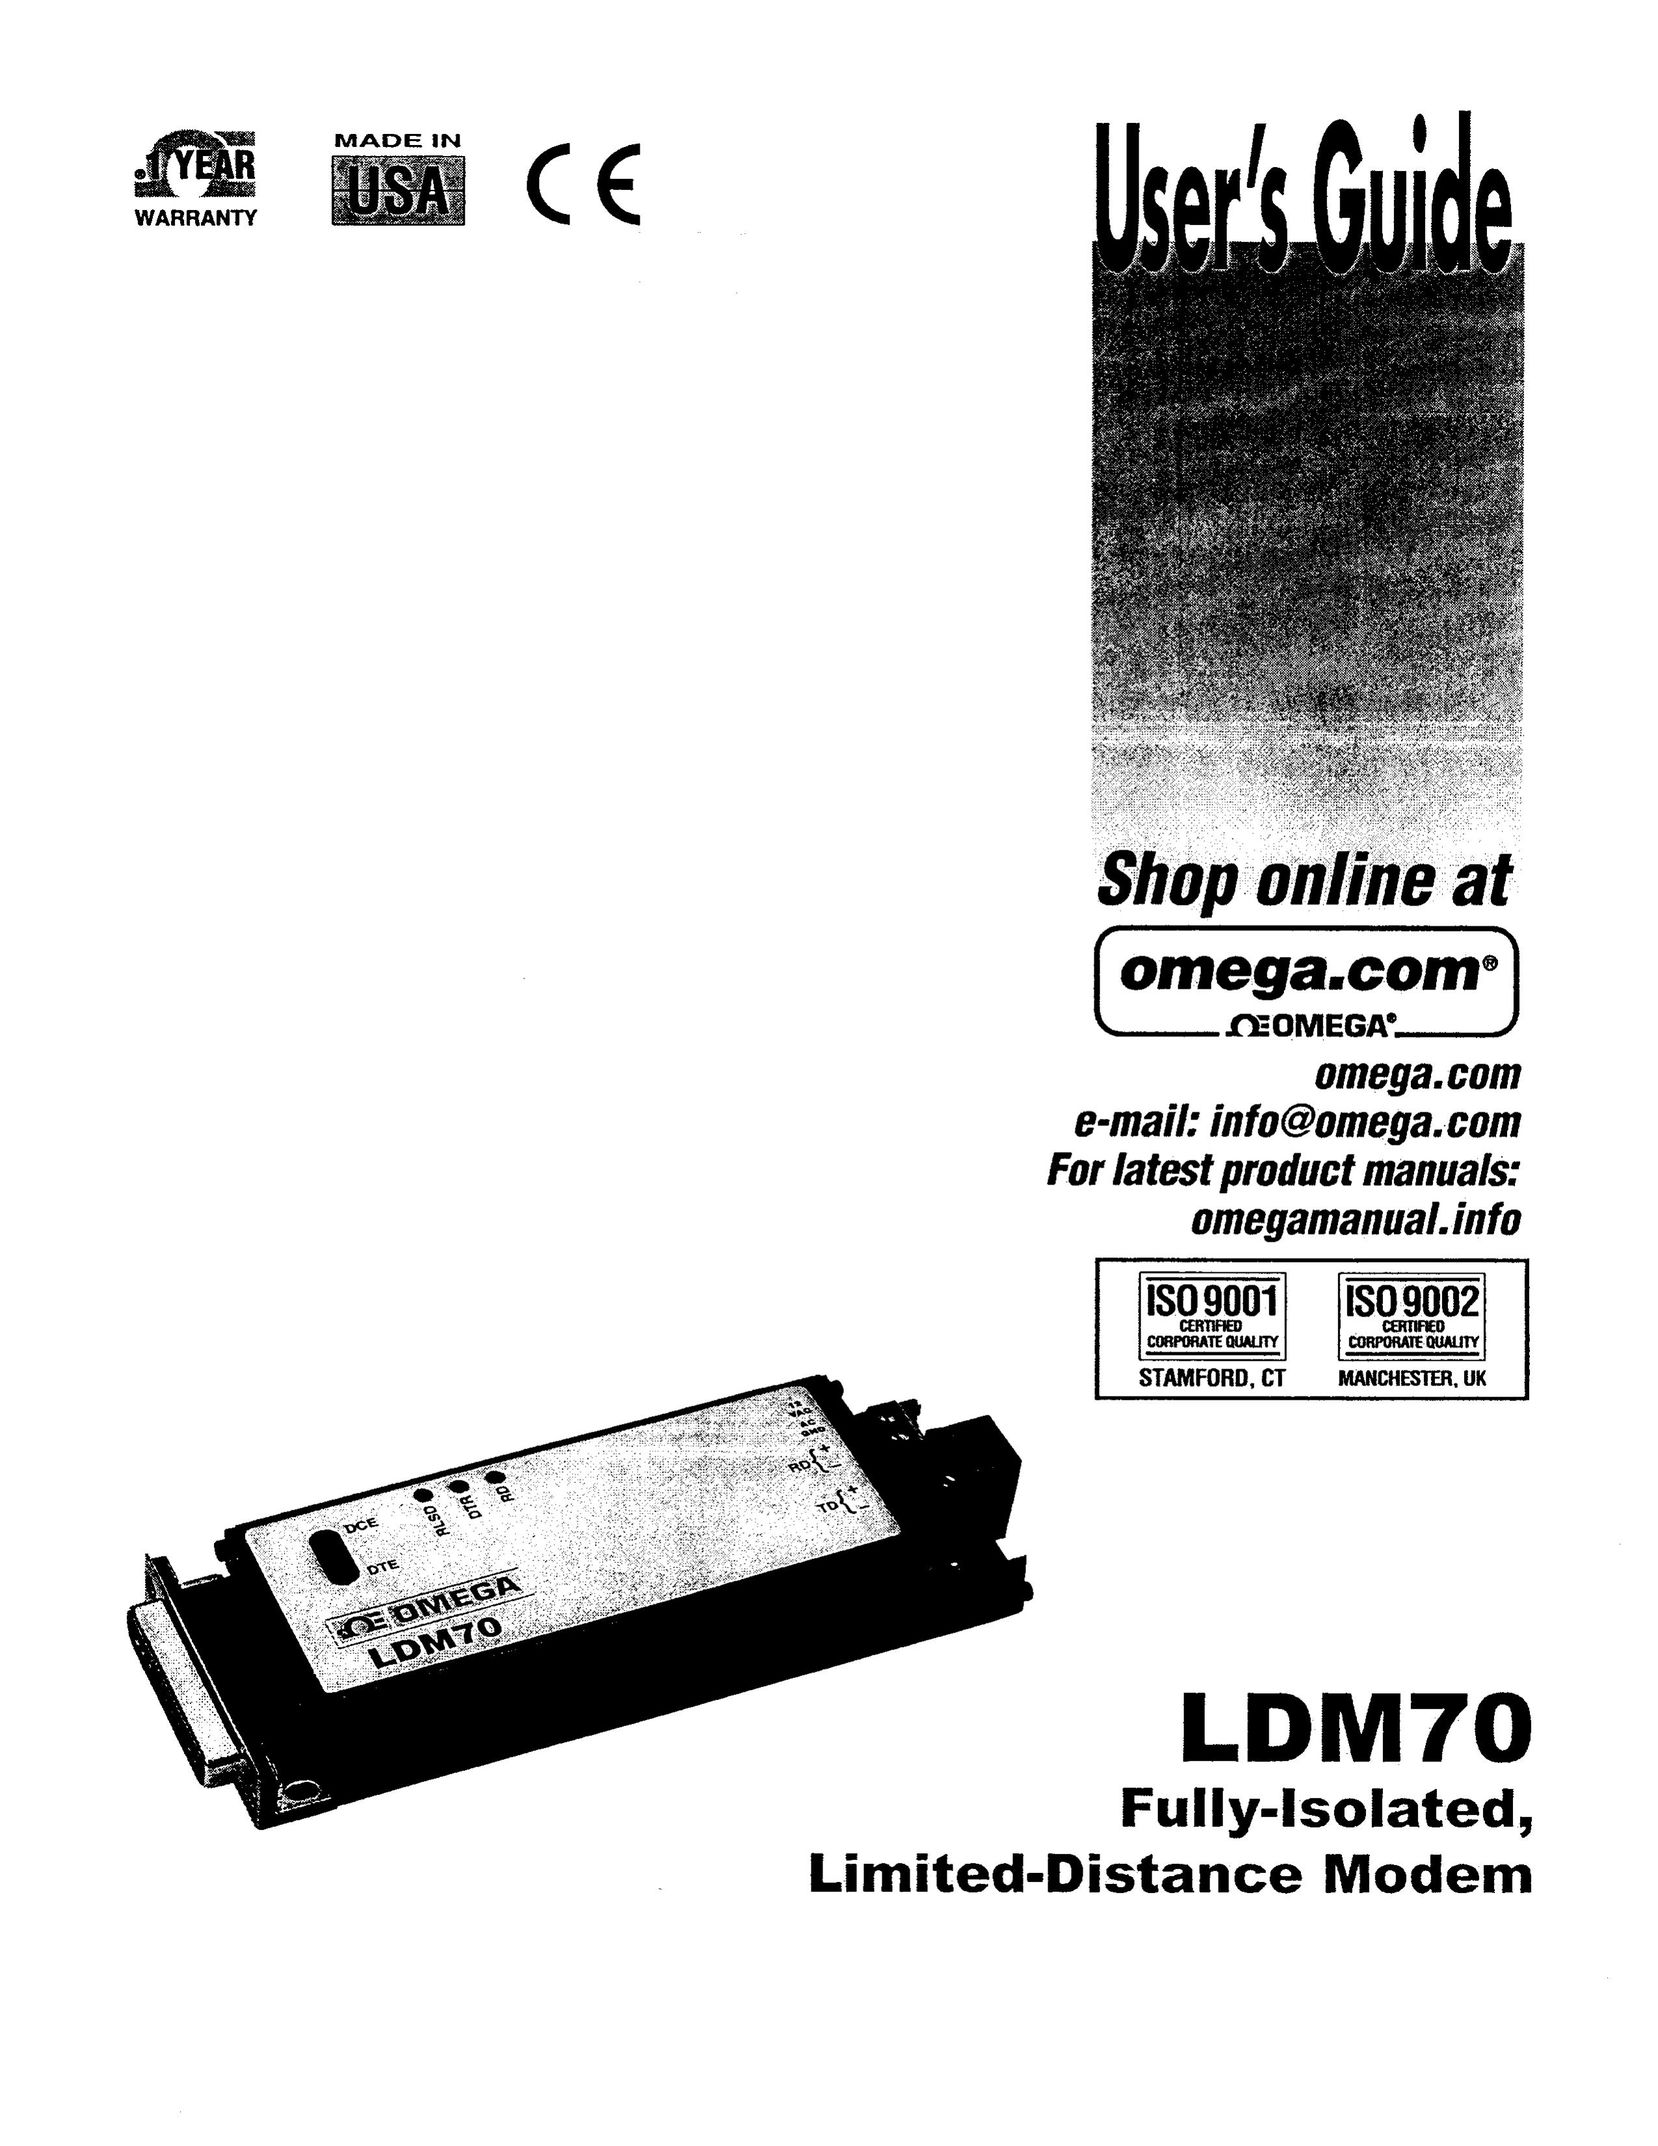 Iomega LDM70 Modem User Manual